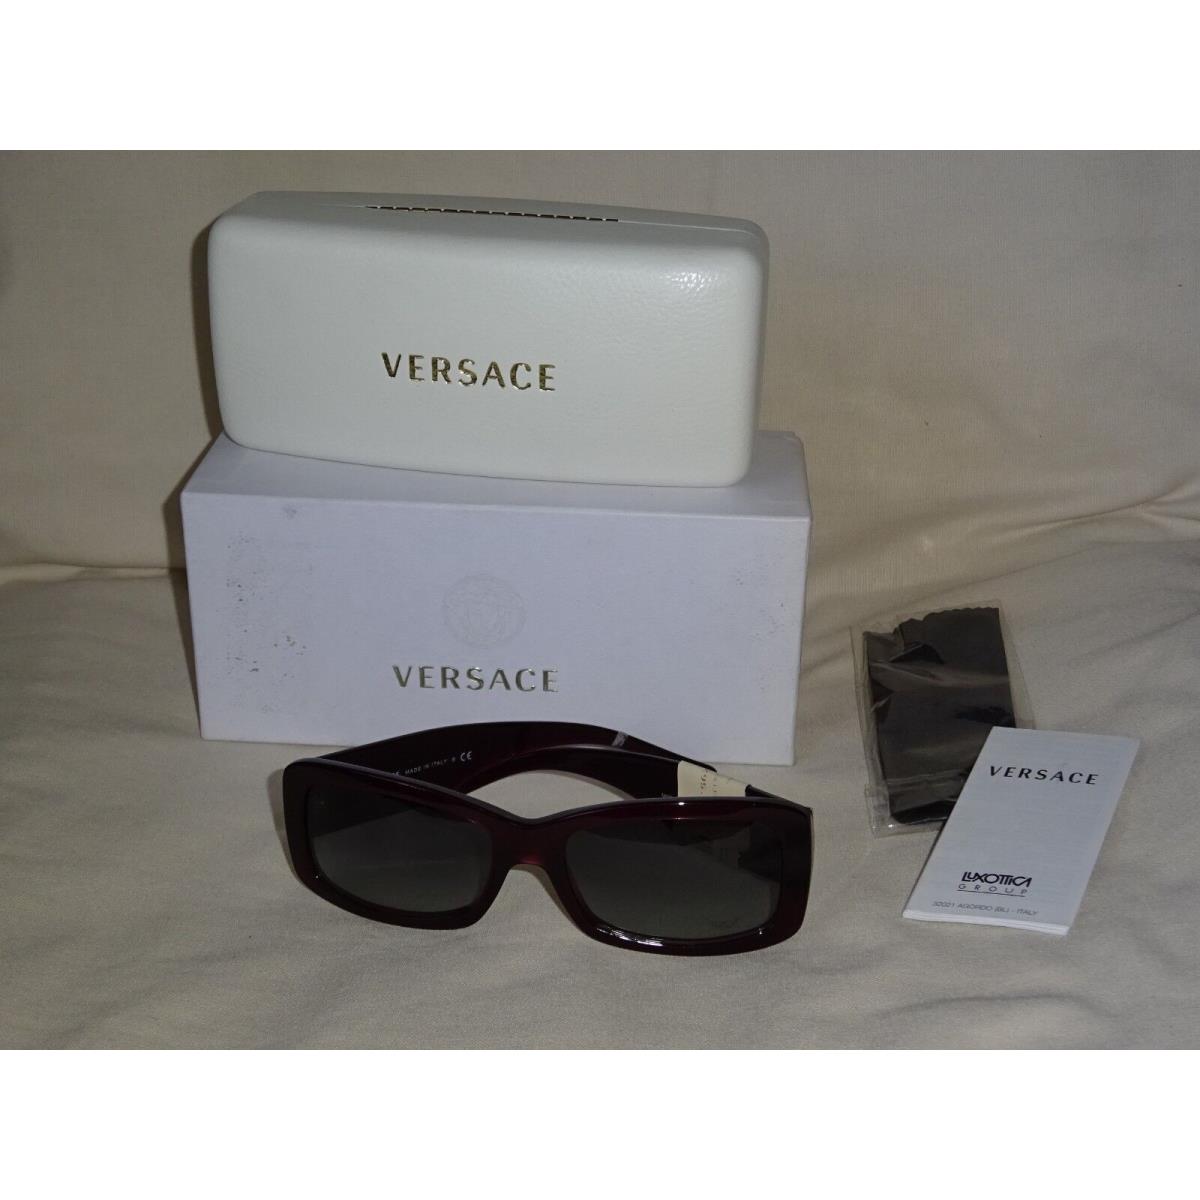 Versace sunglasses  - GOLD , MAROON Frame, Brown Lens 0